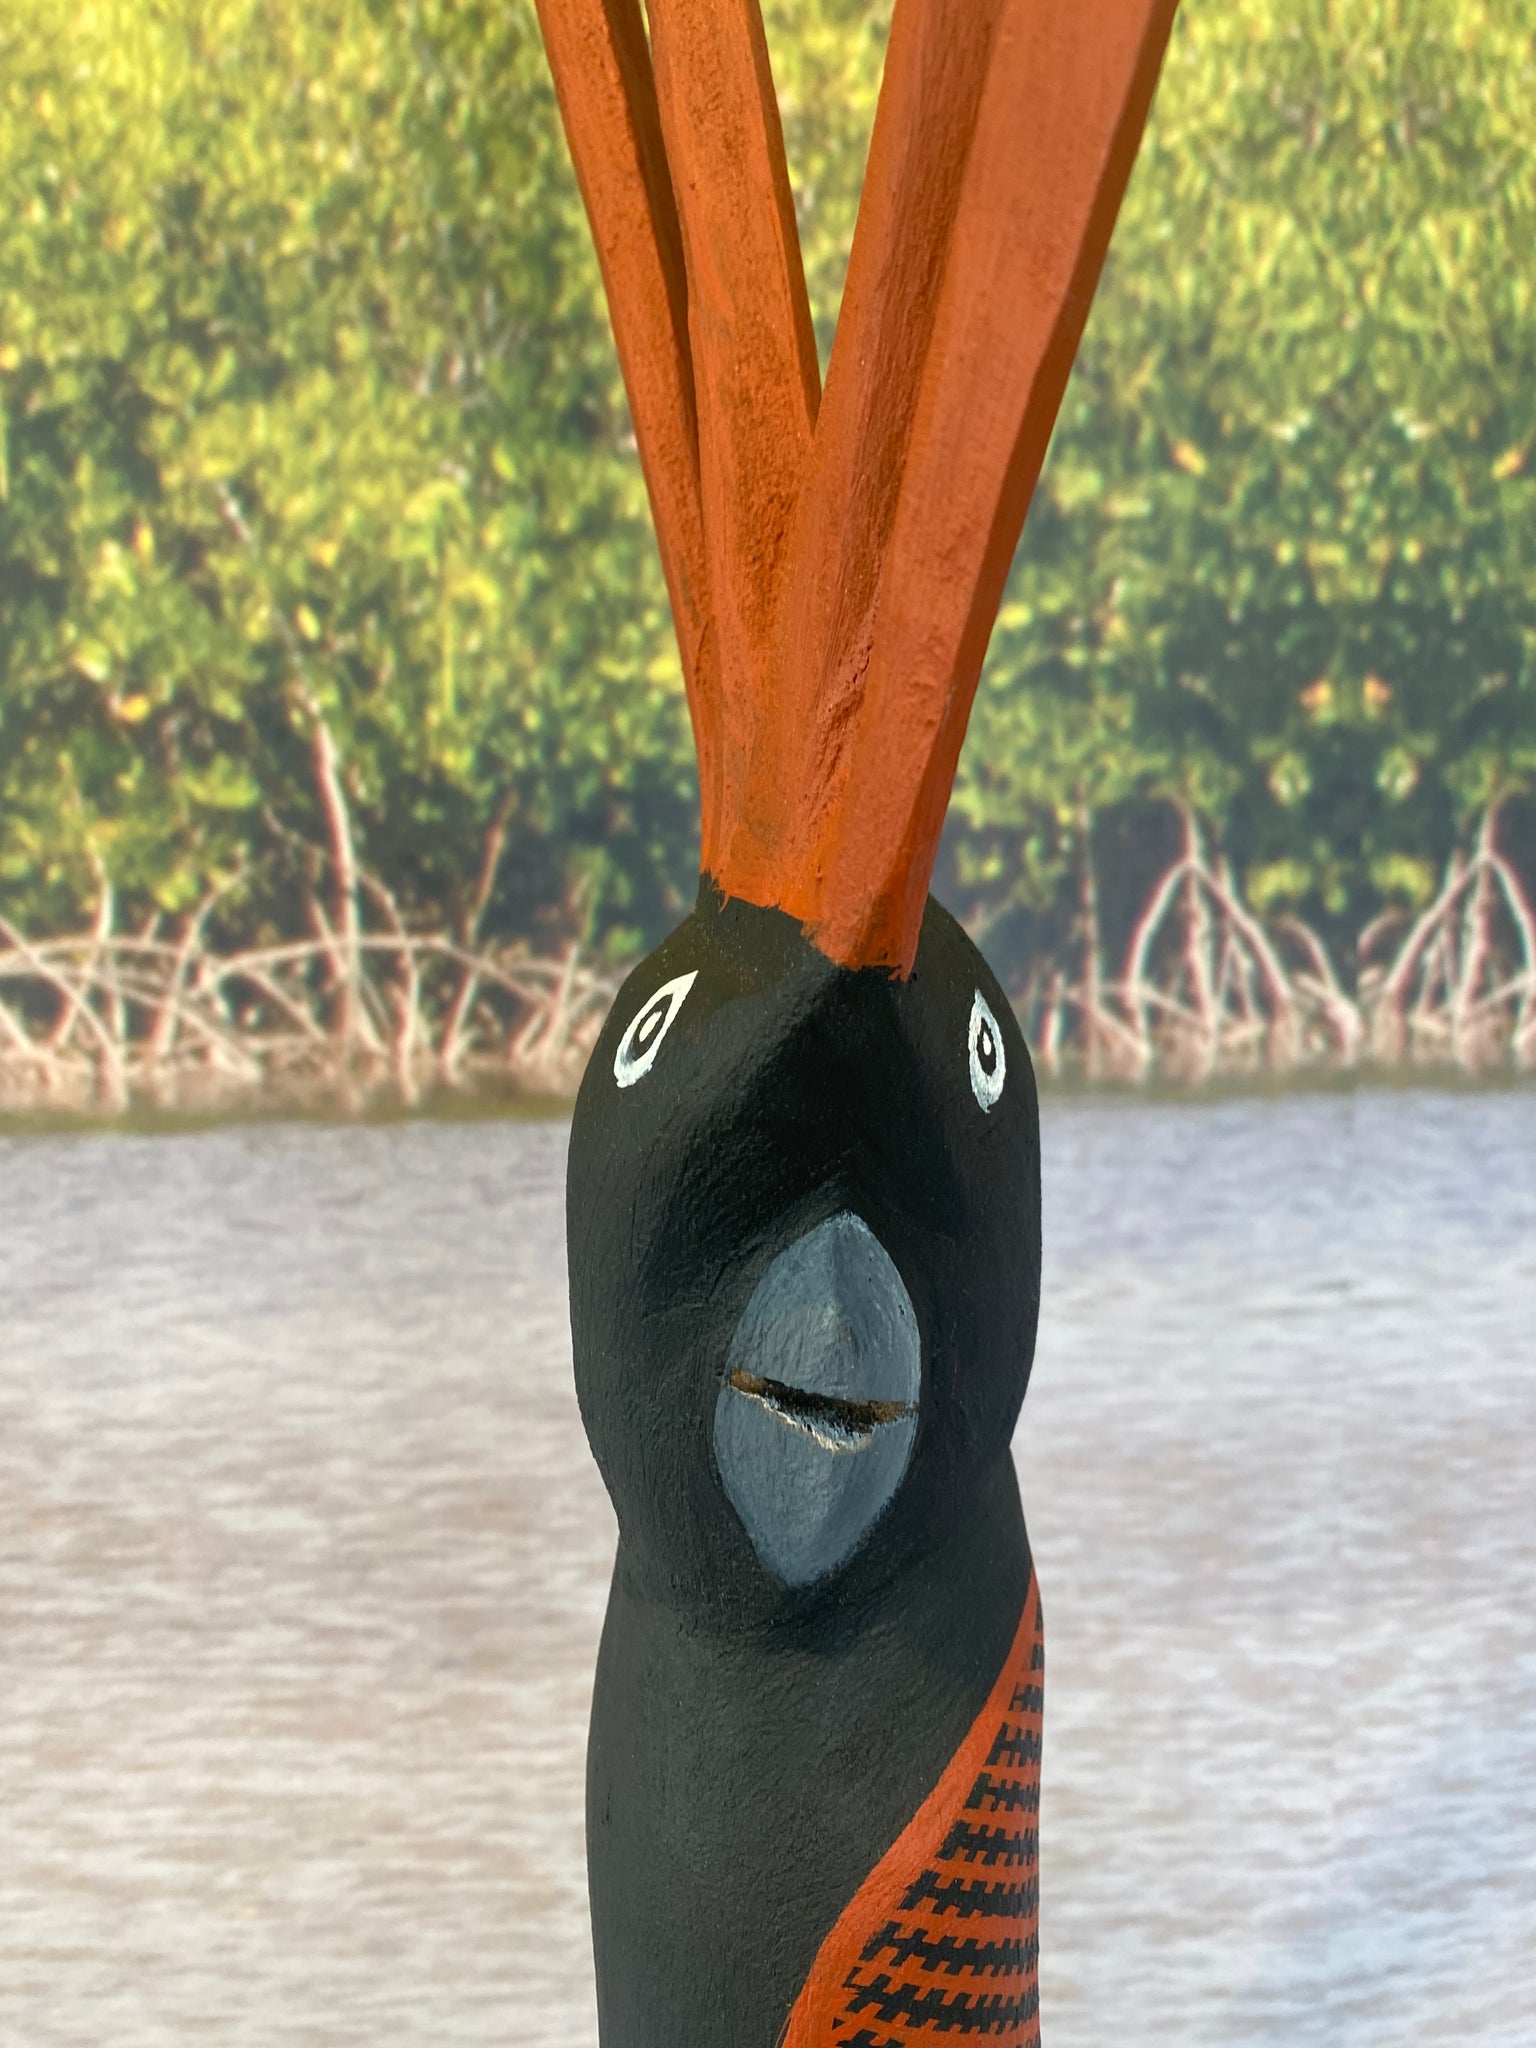 31. Karnamarr (Red Tailed Black Cockatoo)